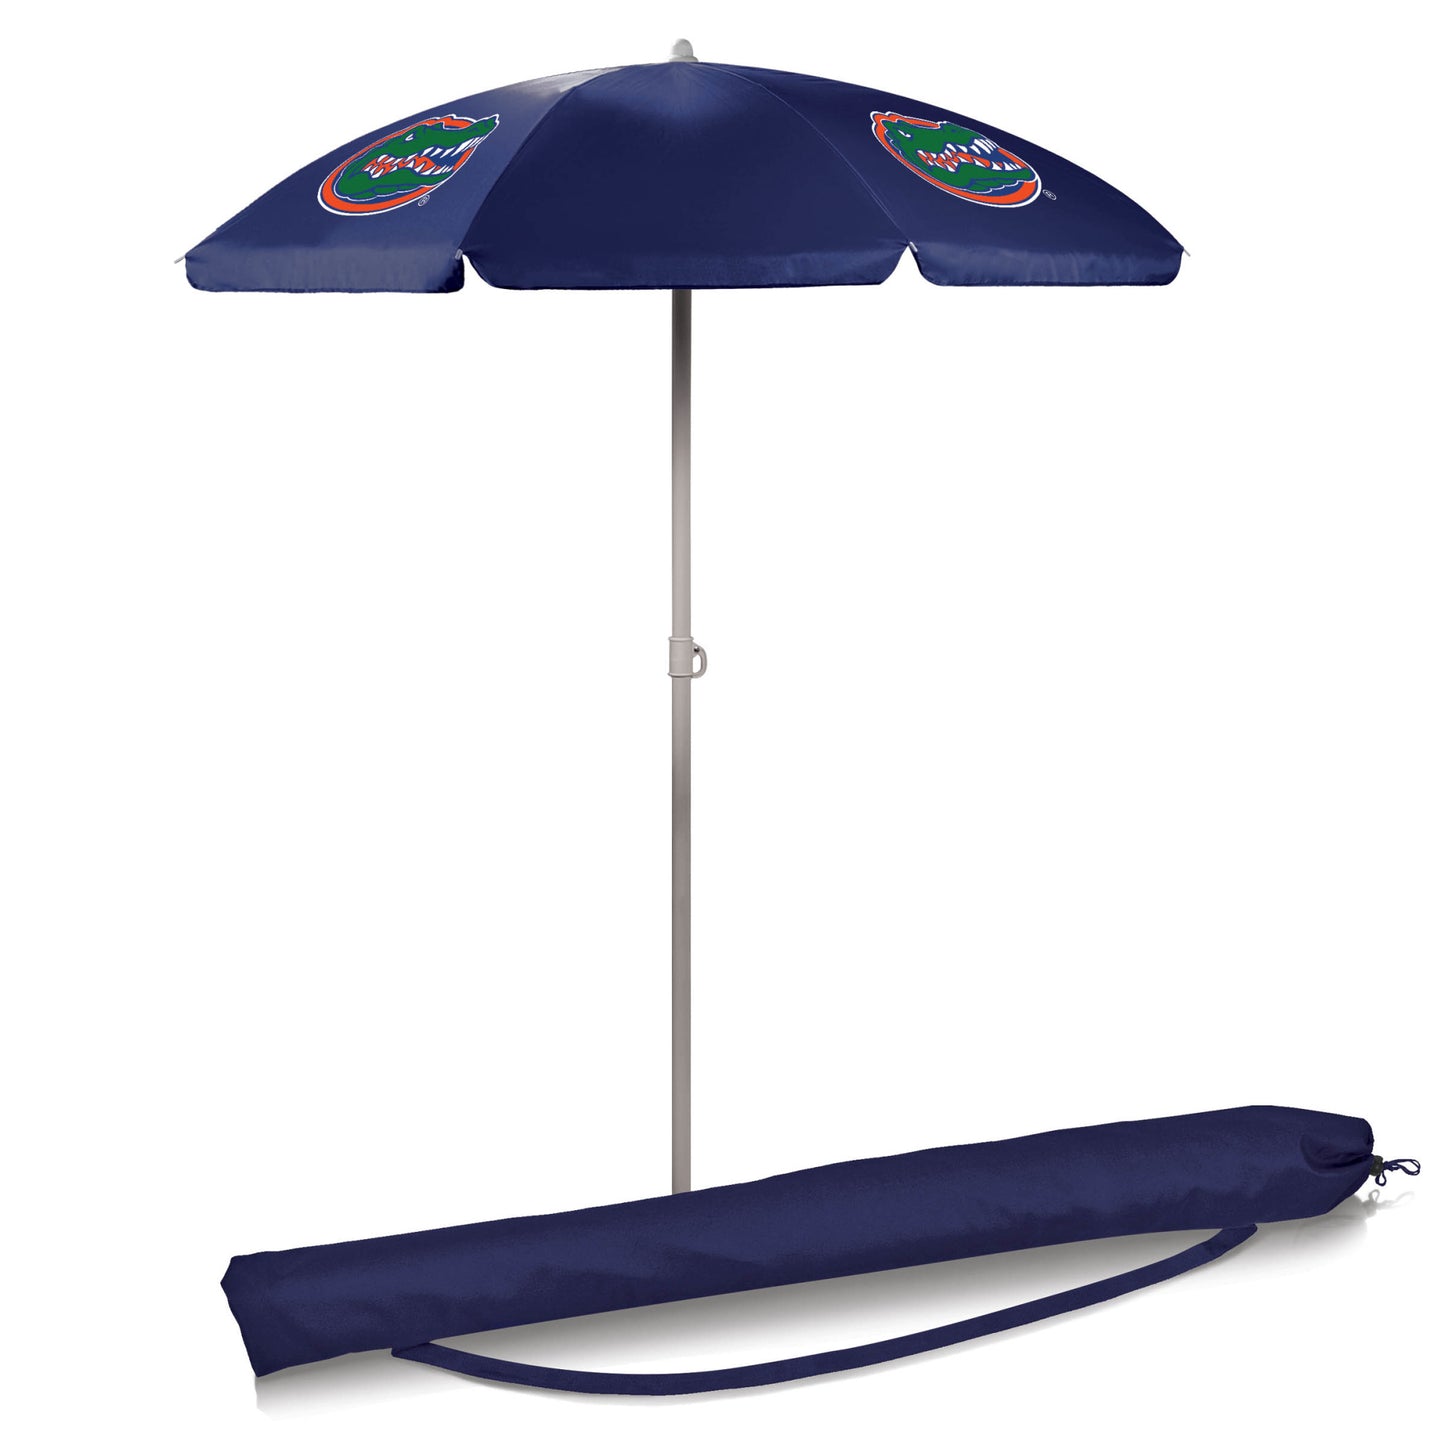 Florida Gators 5.5' Portable Beach Umbrella by Picnic Time